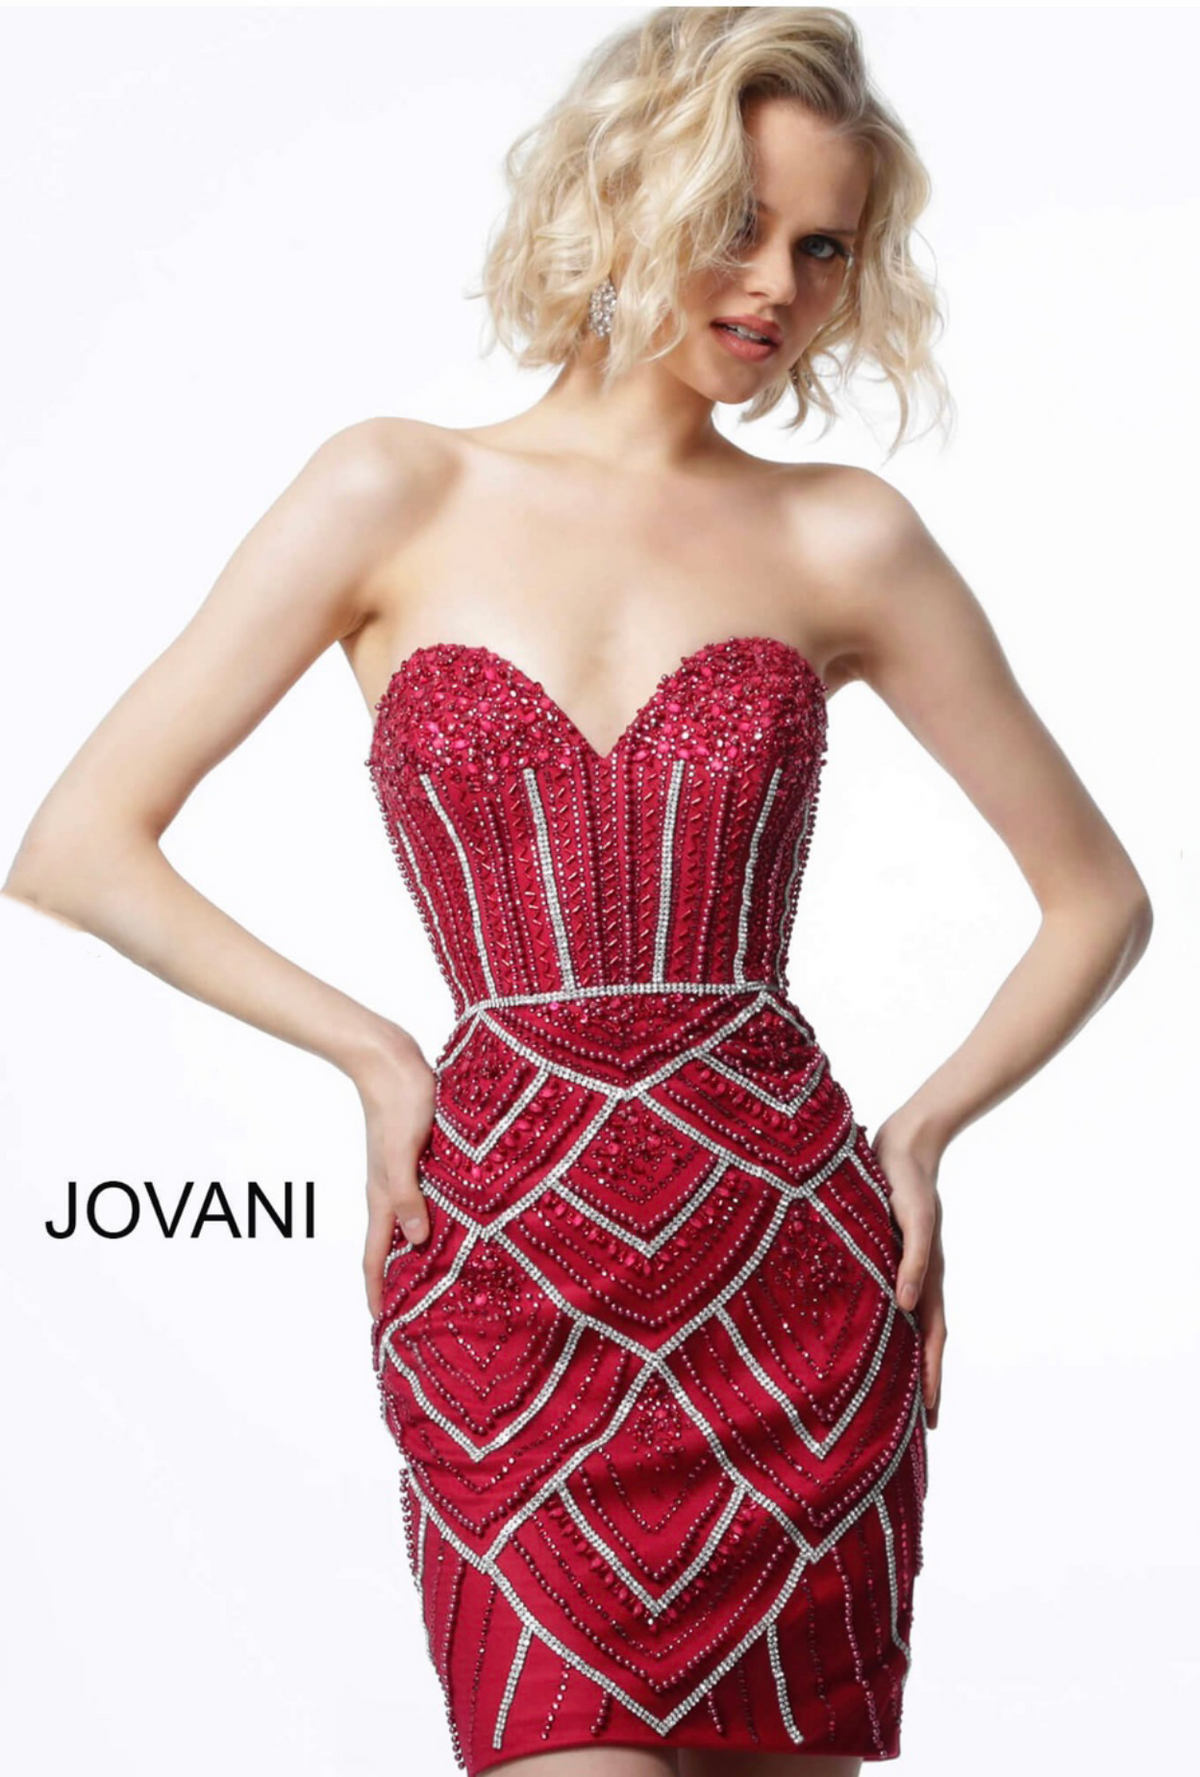 JOVANI STRAPLESS CORSET DRESS